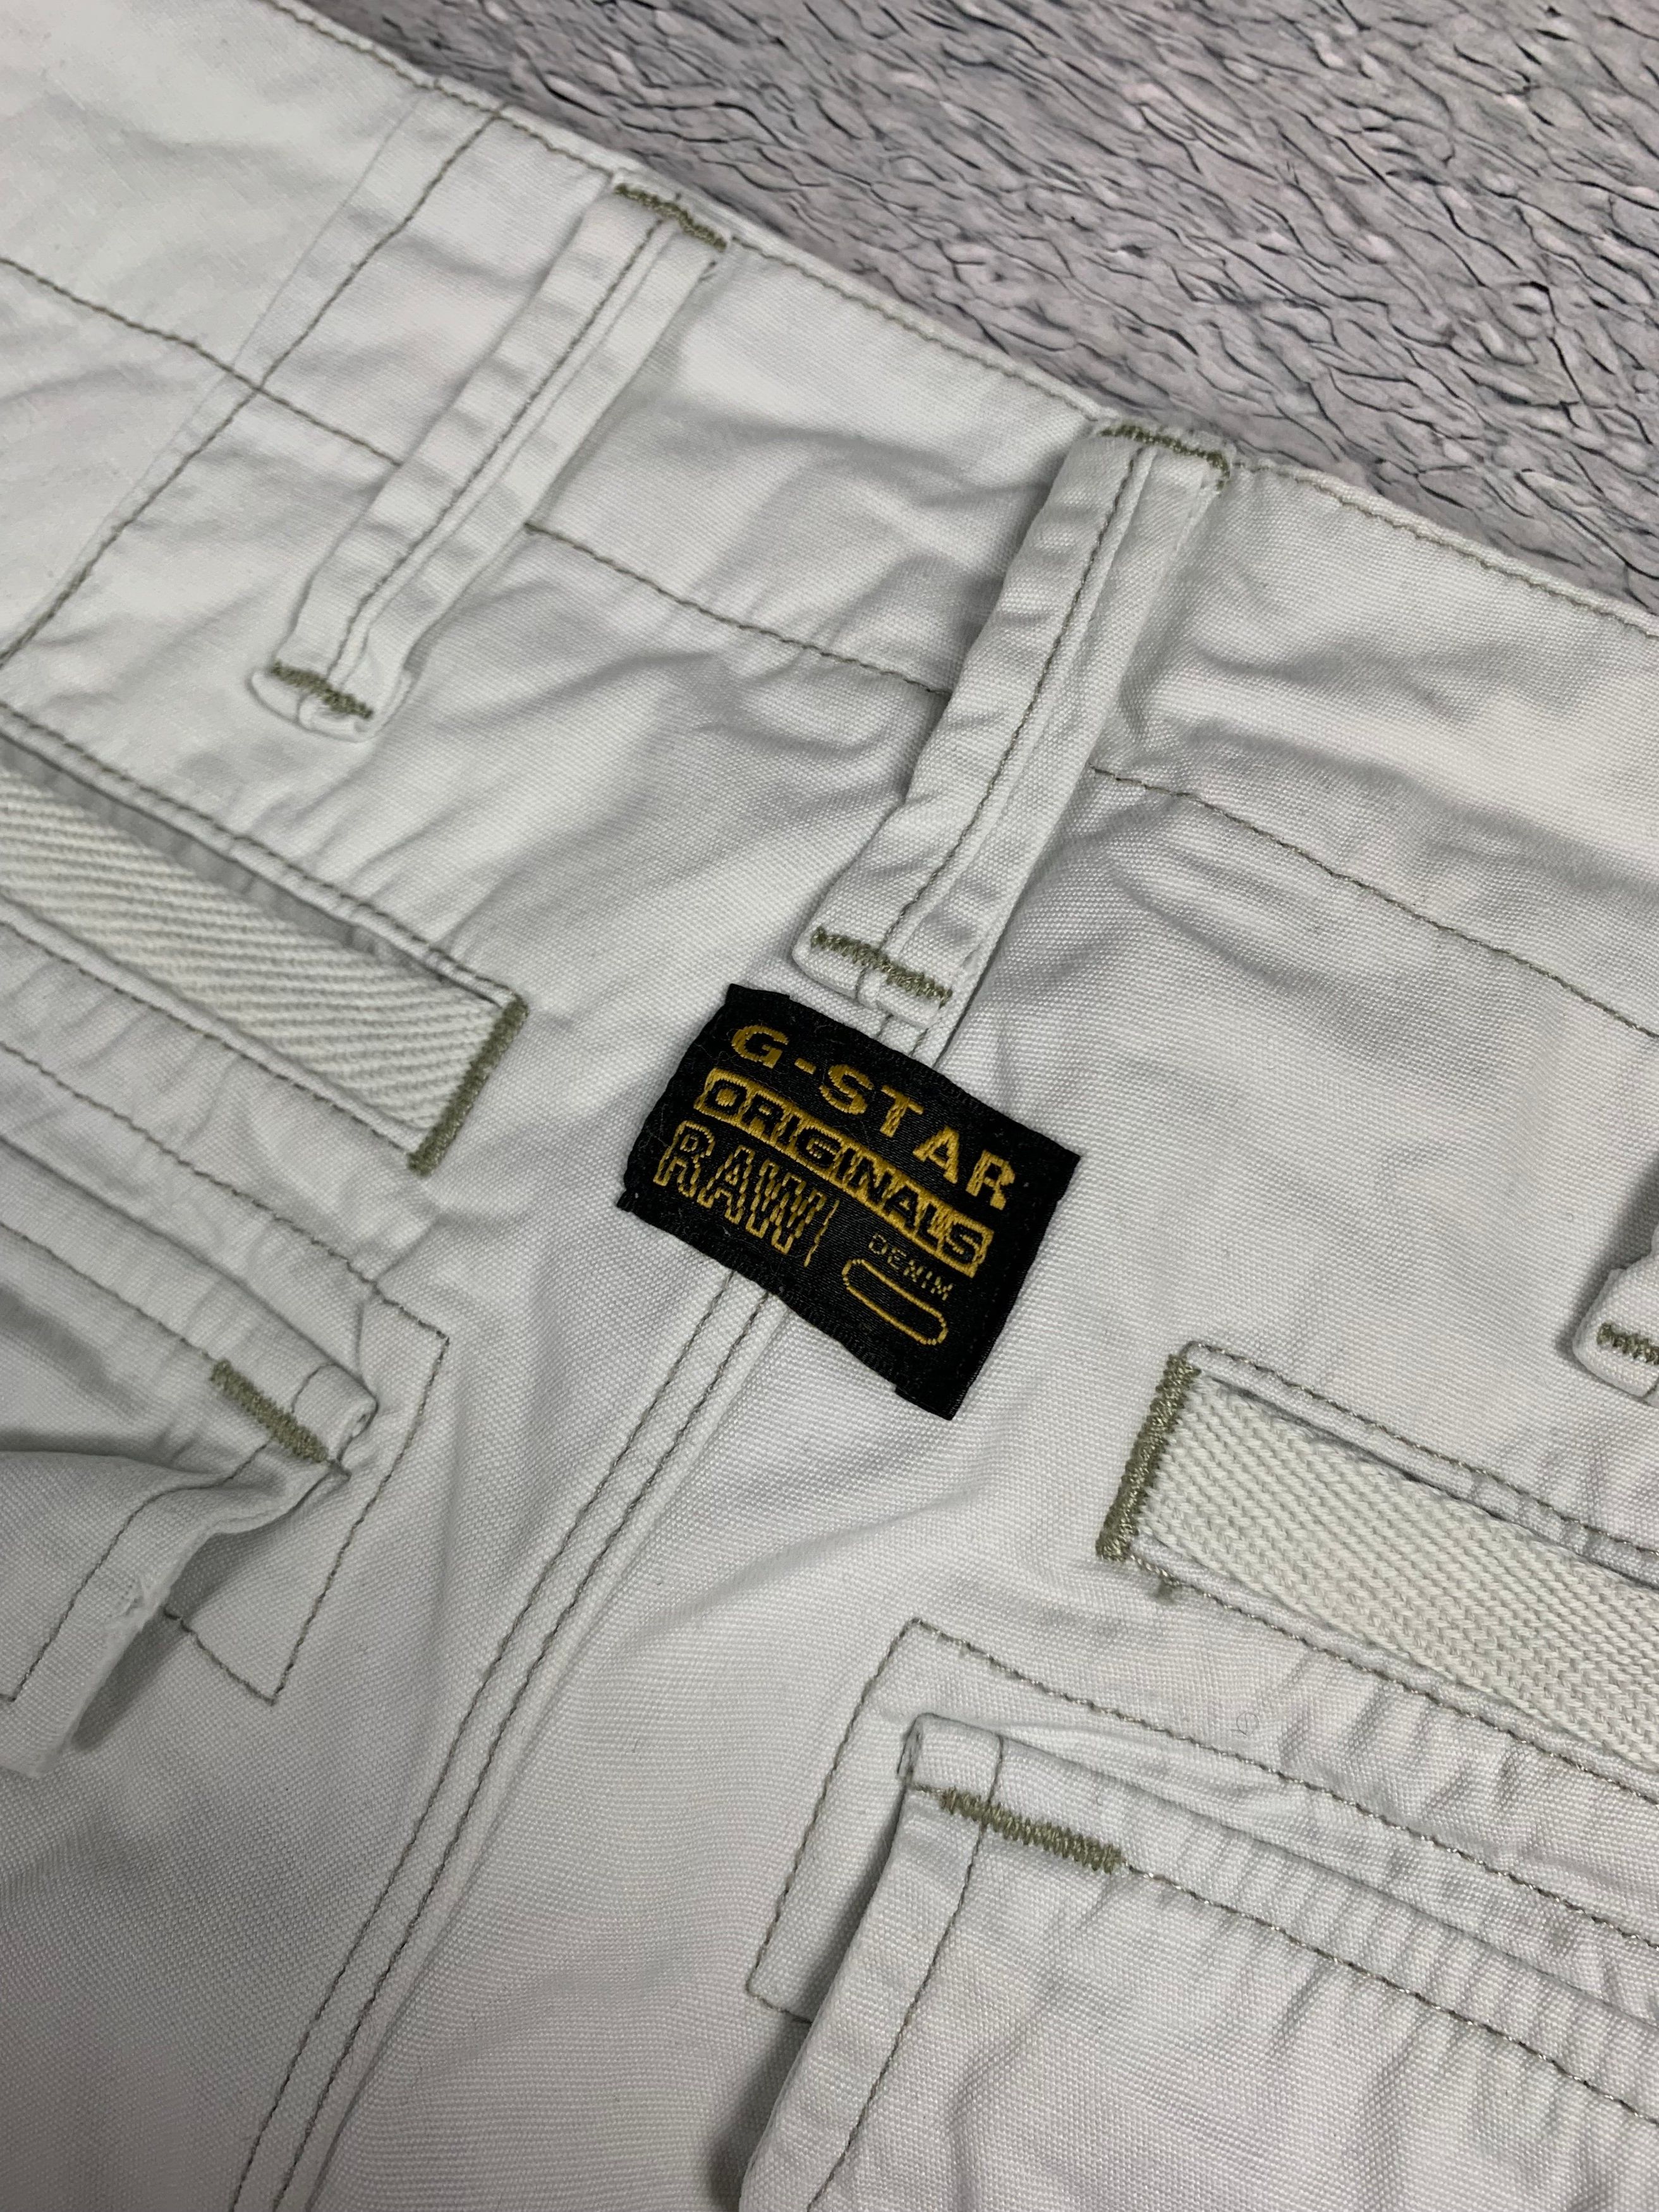 Vintage Vintage Gstar Raw cargo pants multi pocket Parachute Size US 30 / EU 46 - 5 Thumbnail